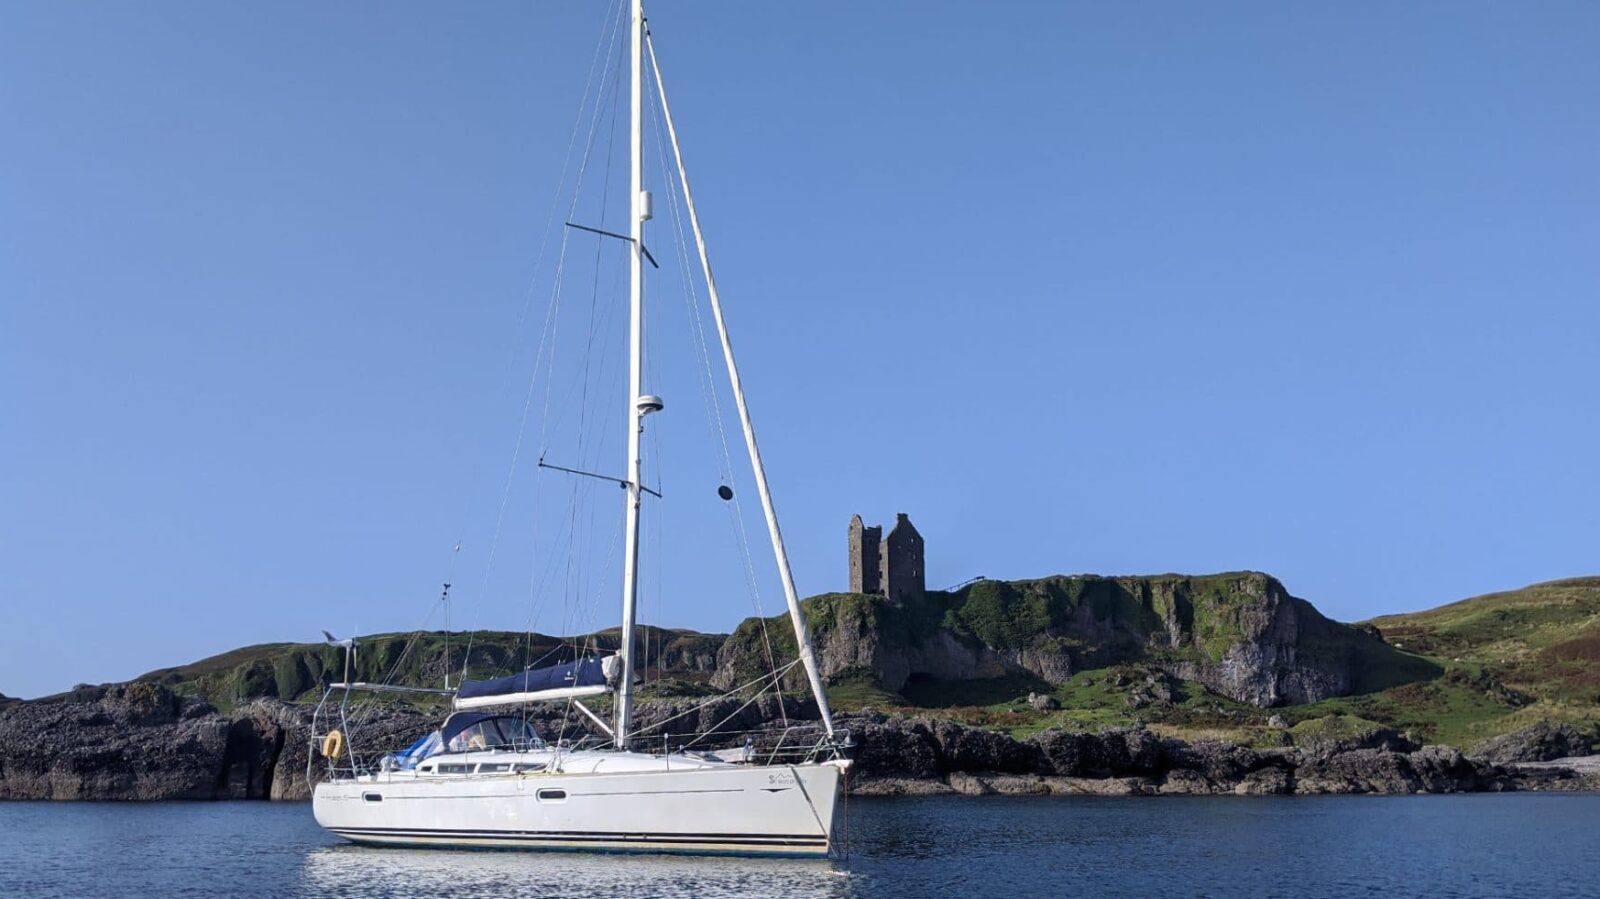 Stravaigin-anchored-in-scotland-1800x1200